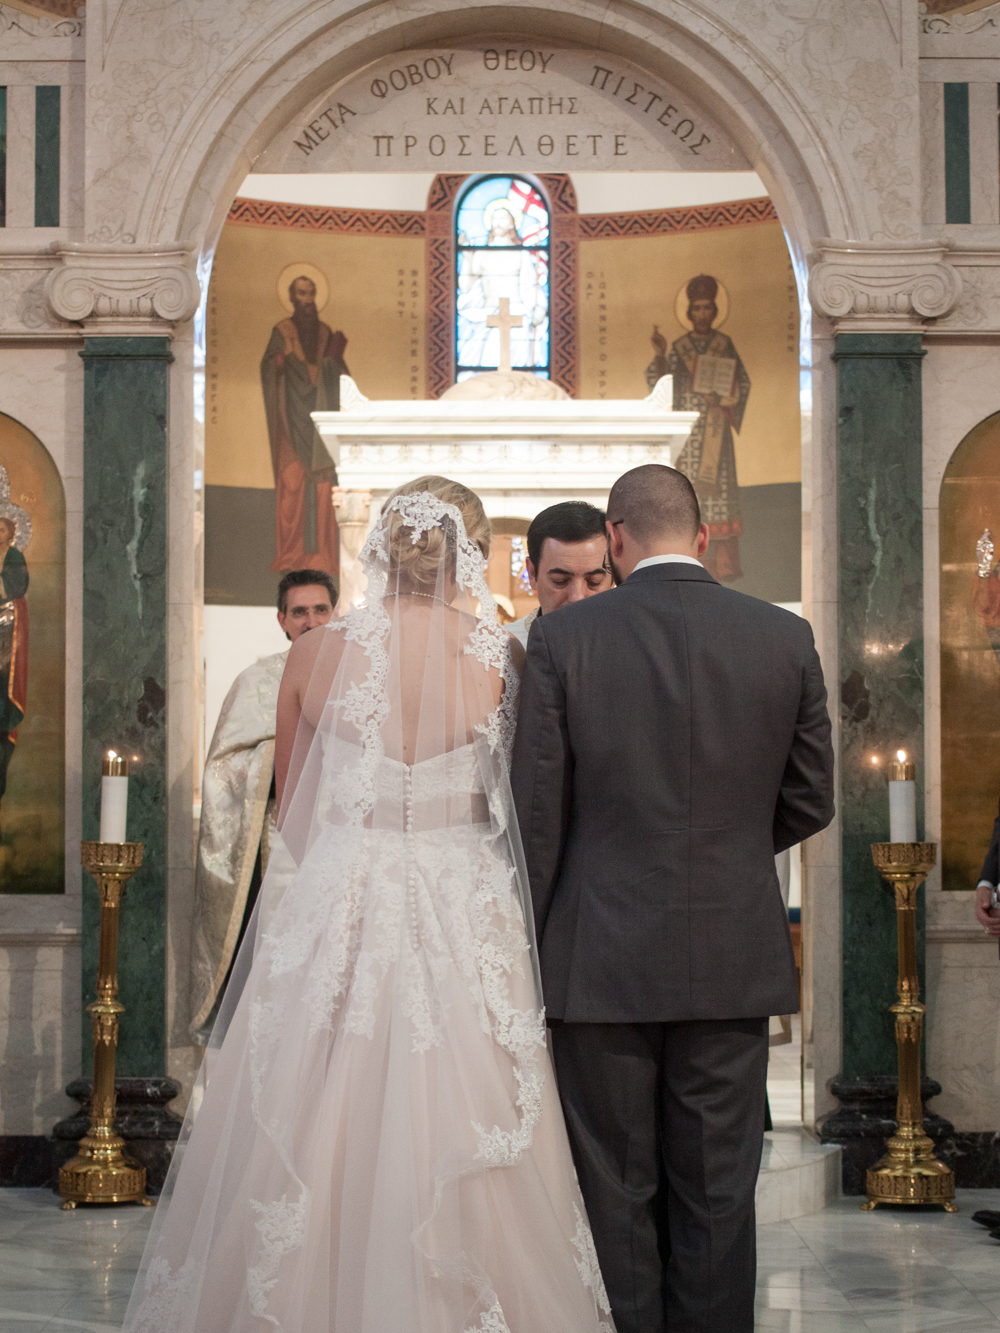 Houston wedding photographer - Christine Gosch - Houston film photographer - greek wedding in Houston - Annunciation Greek Orthodox church in Houston, Texas - Houston wedding planner -29.jpg